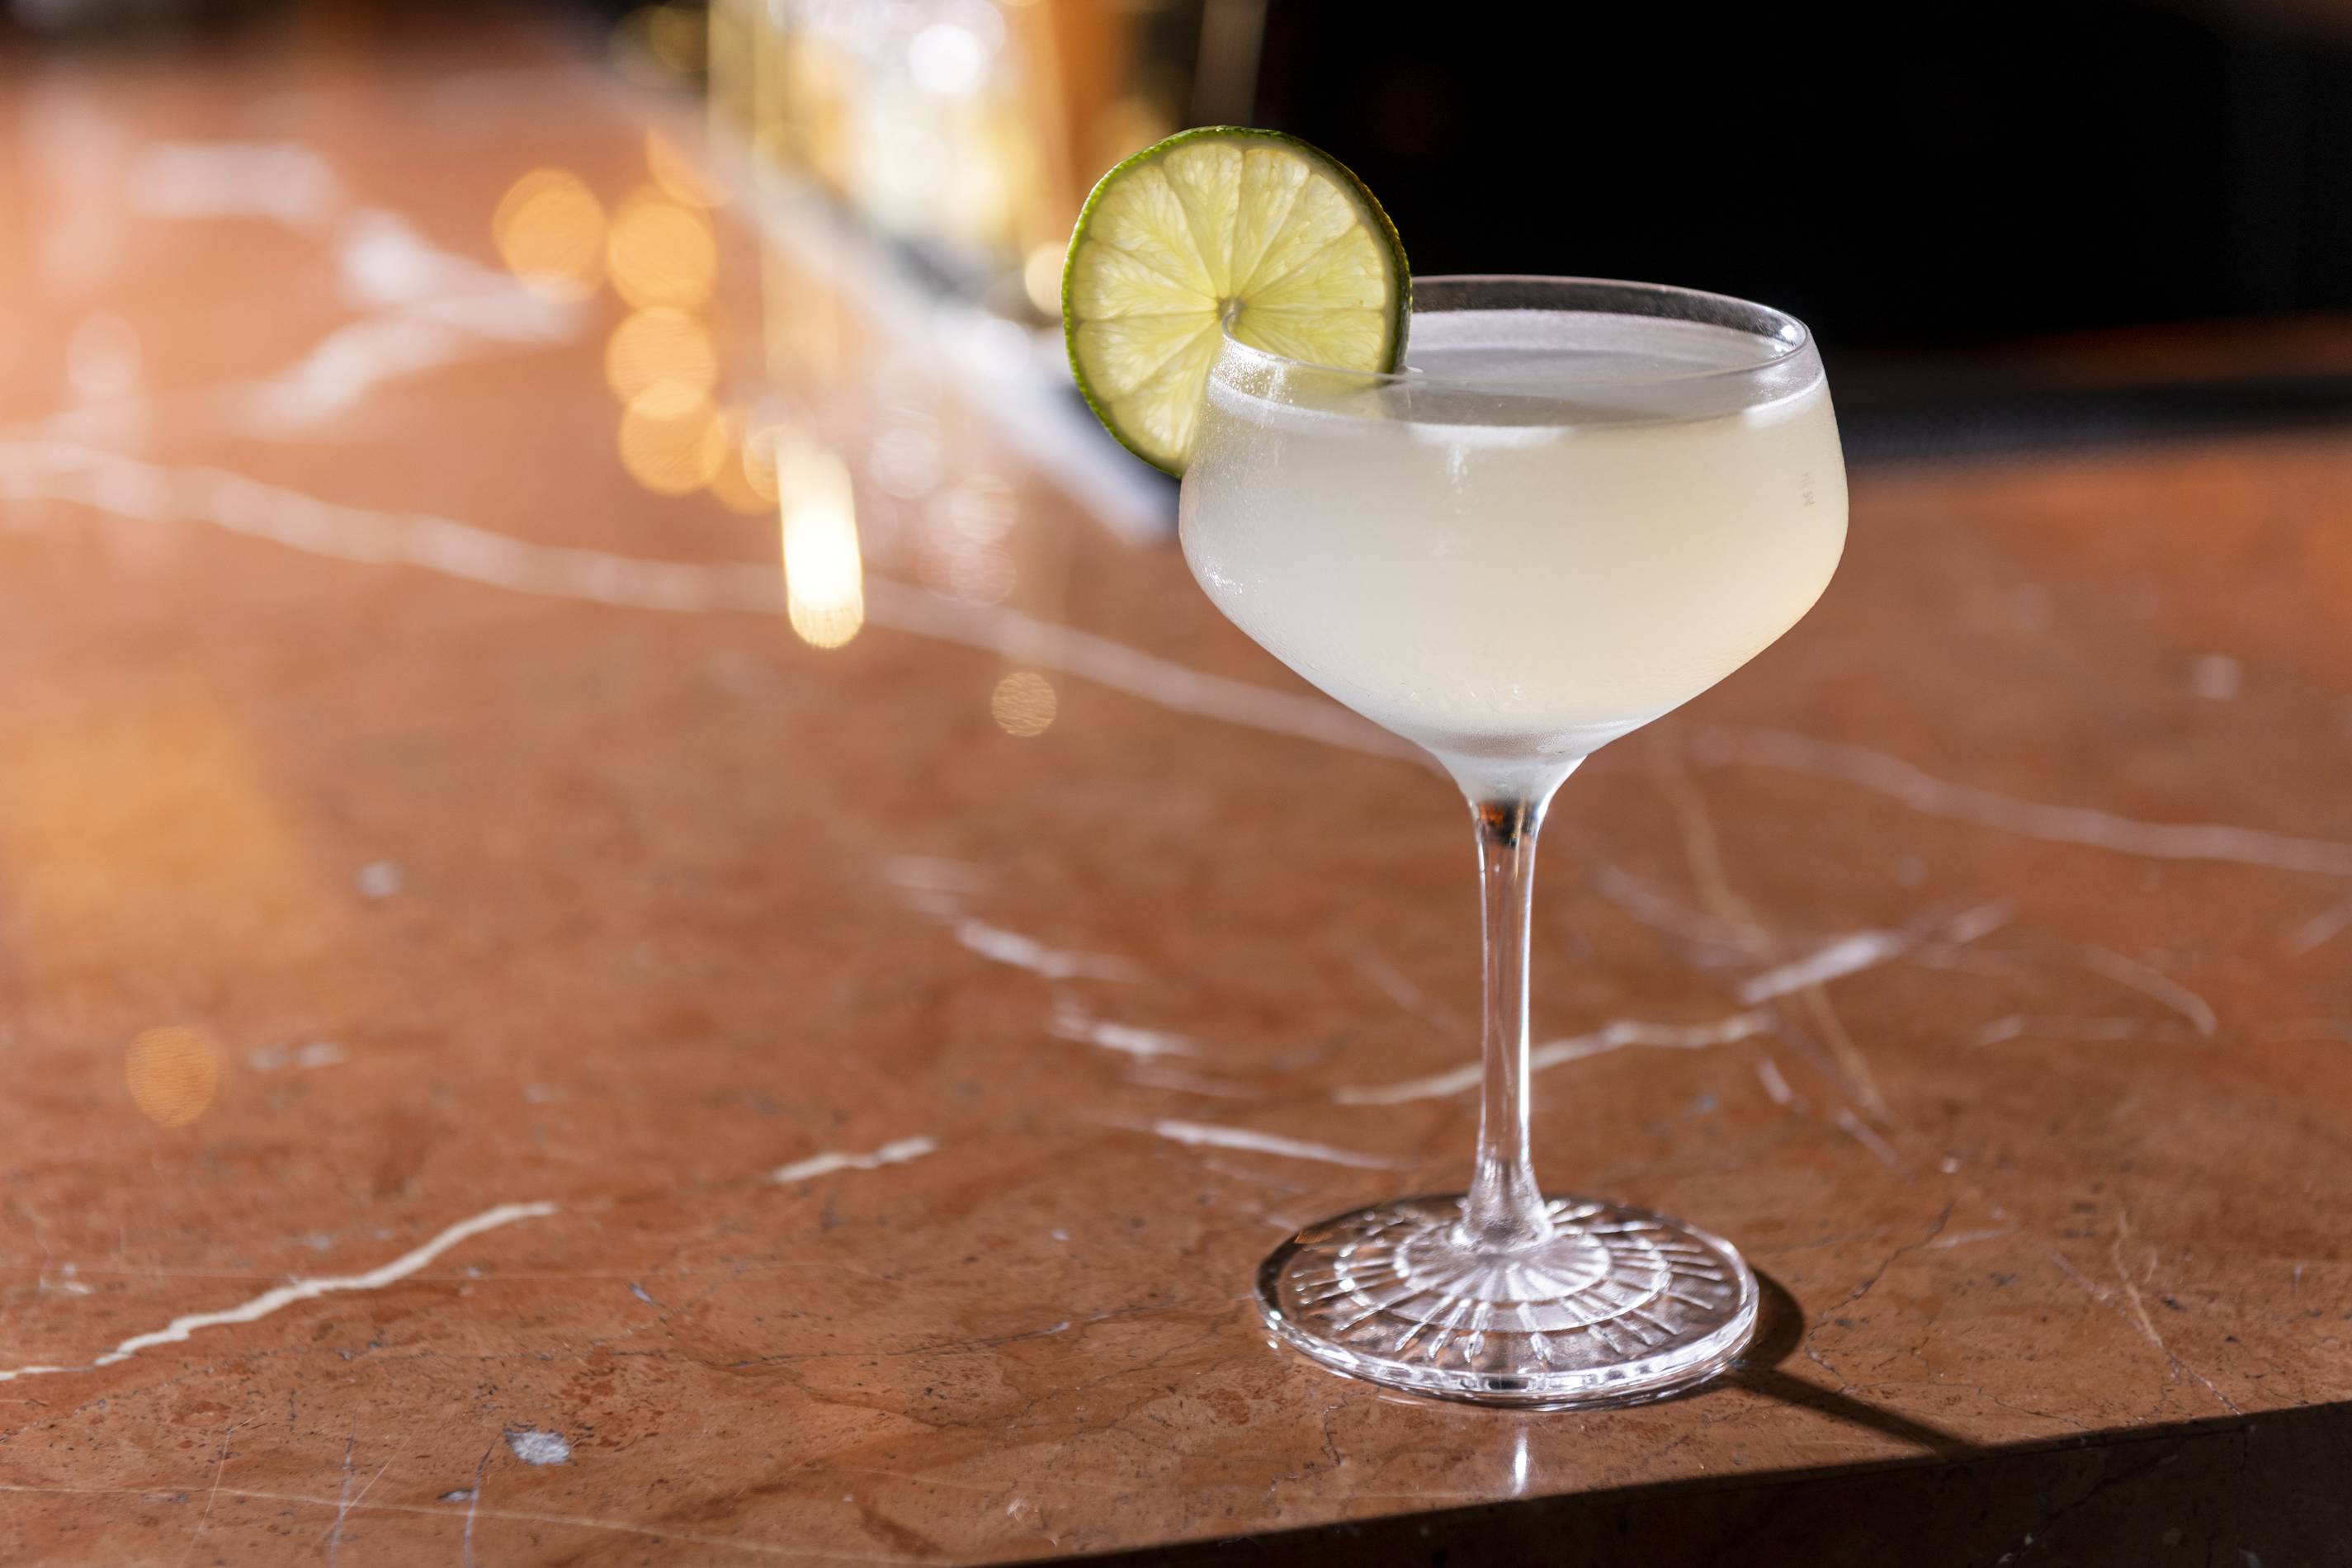 Atlantic Grill's White Flower cocktail